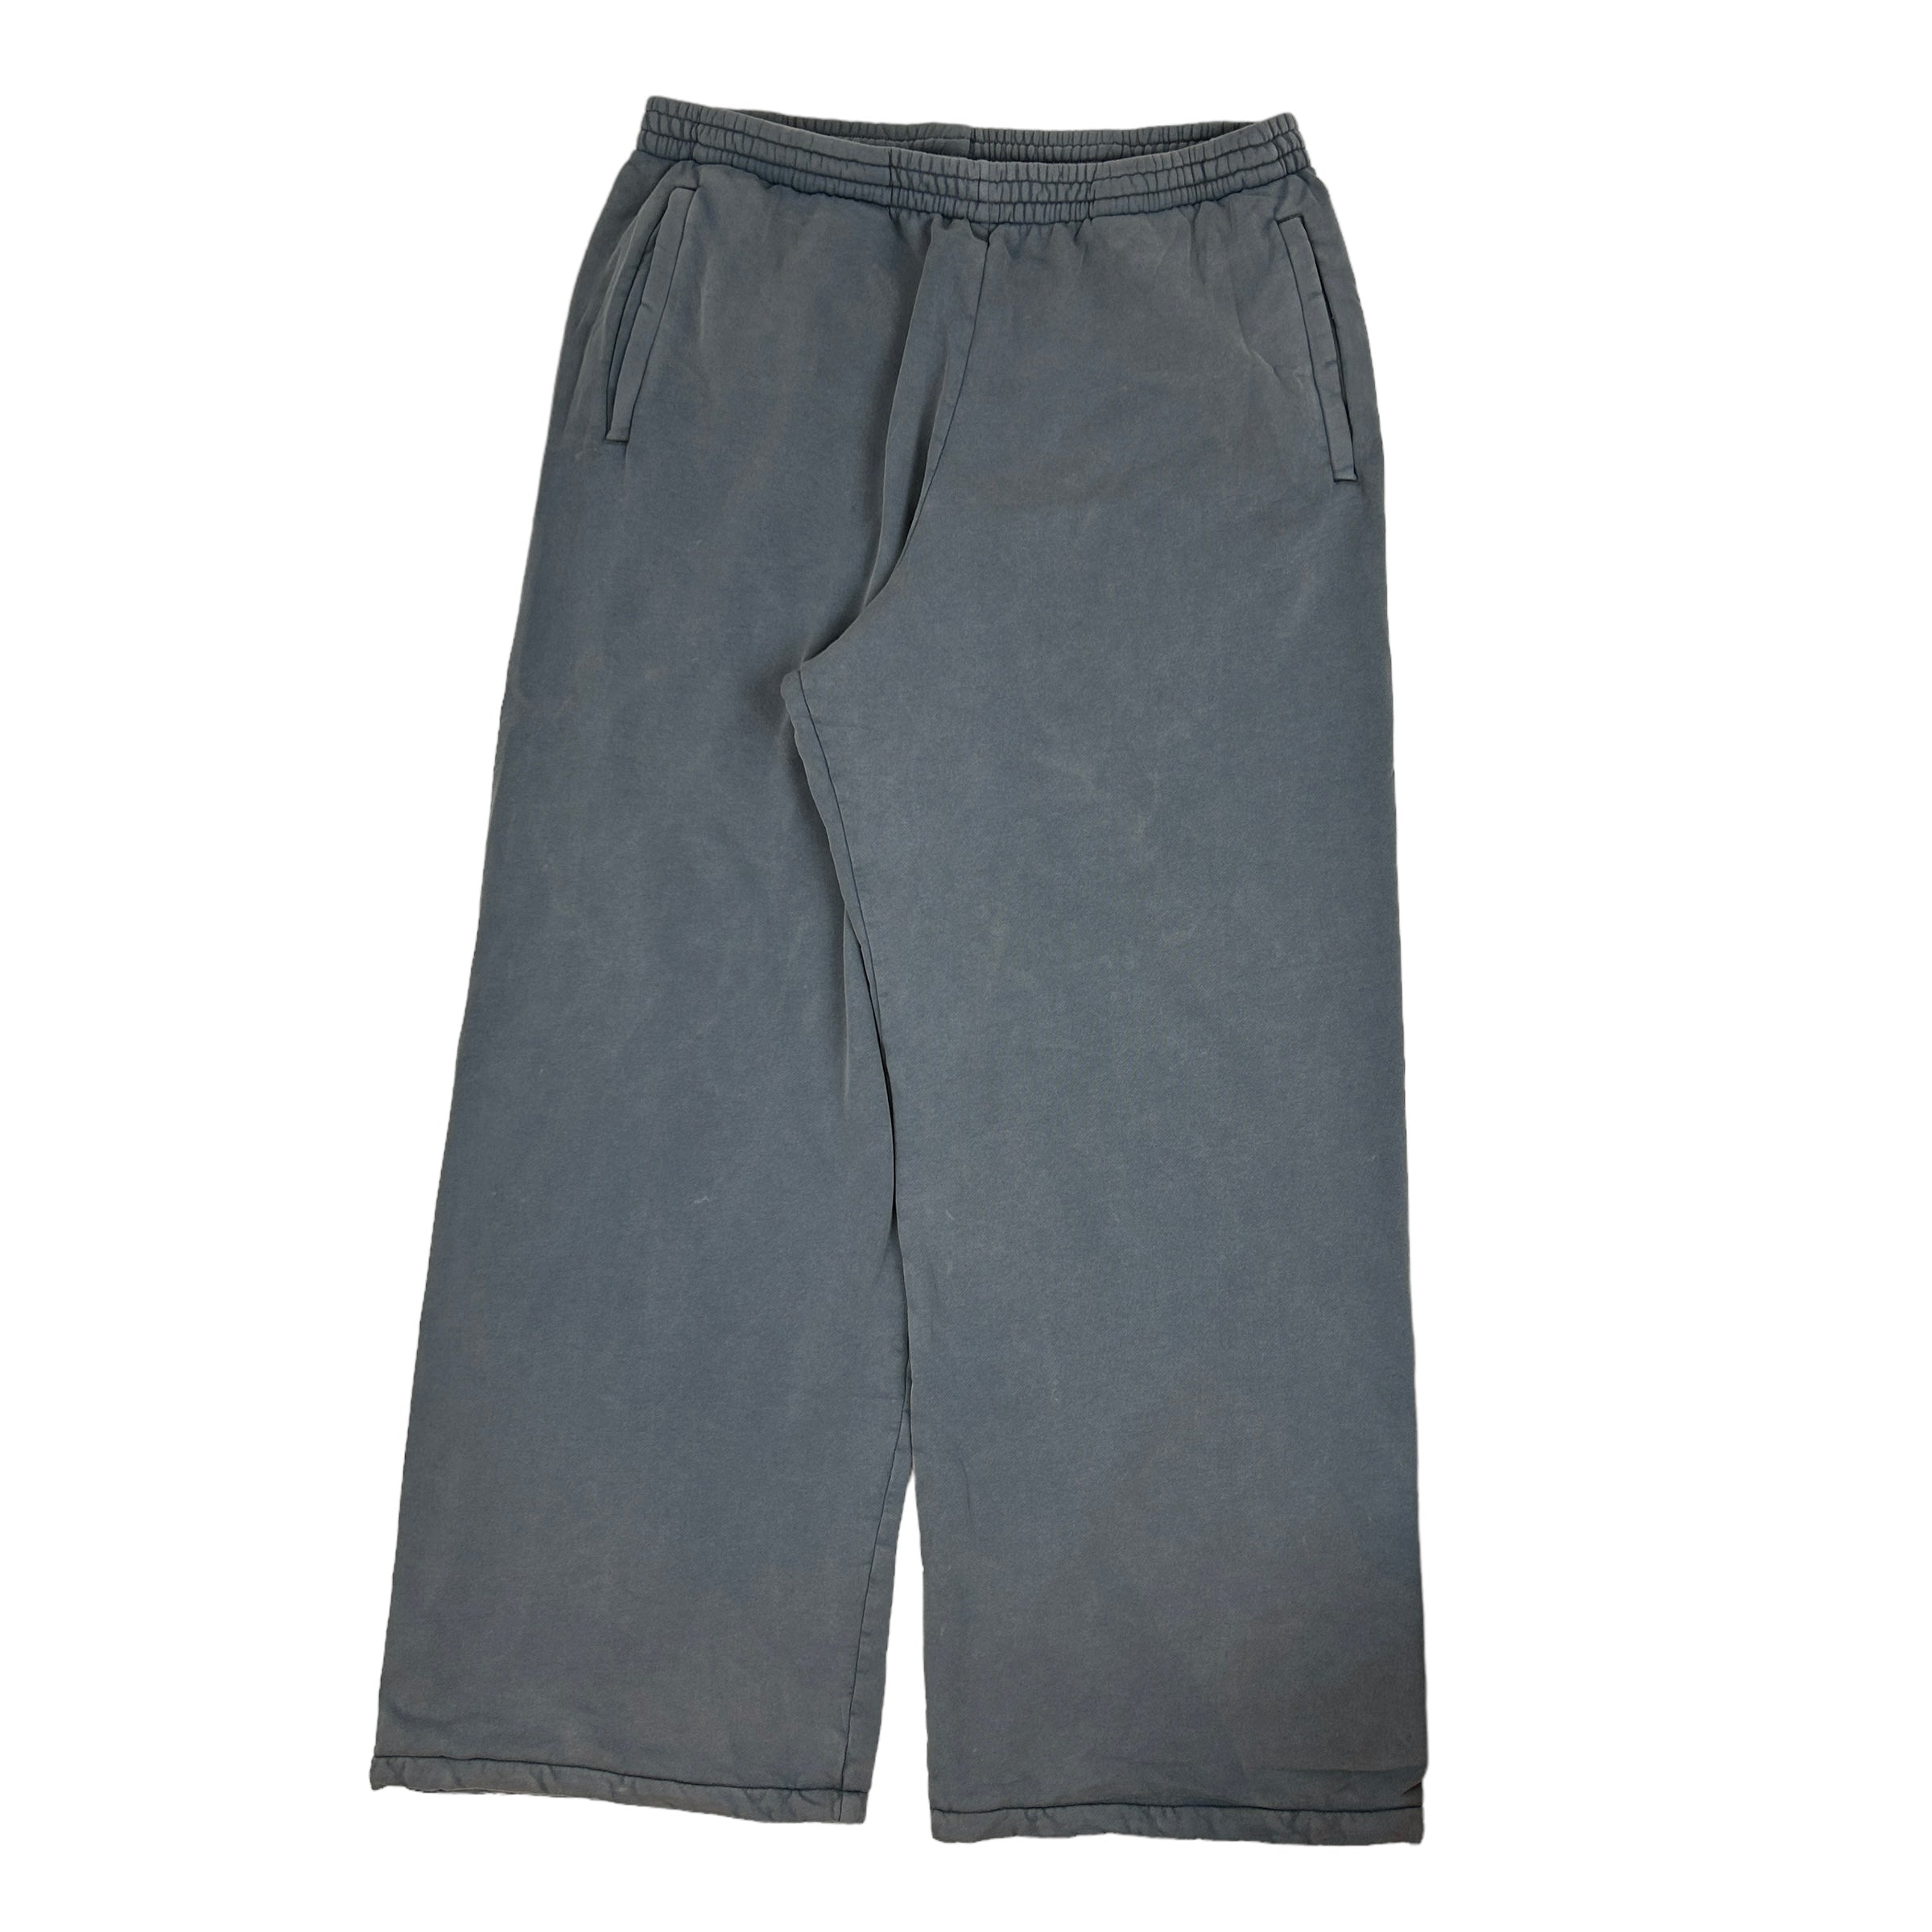 Yeezy x Gap Unreleased Double Layered Sweatpants Washed Grey